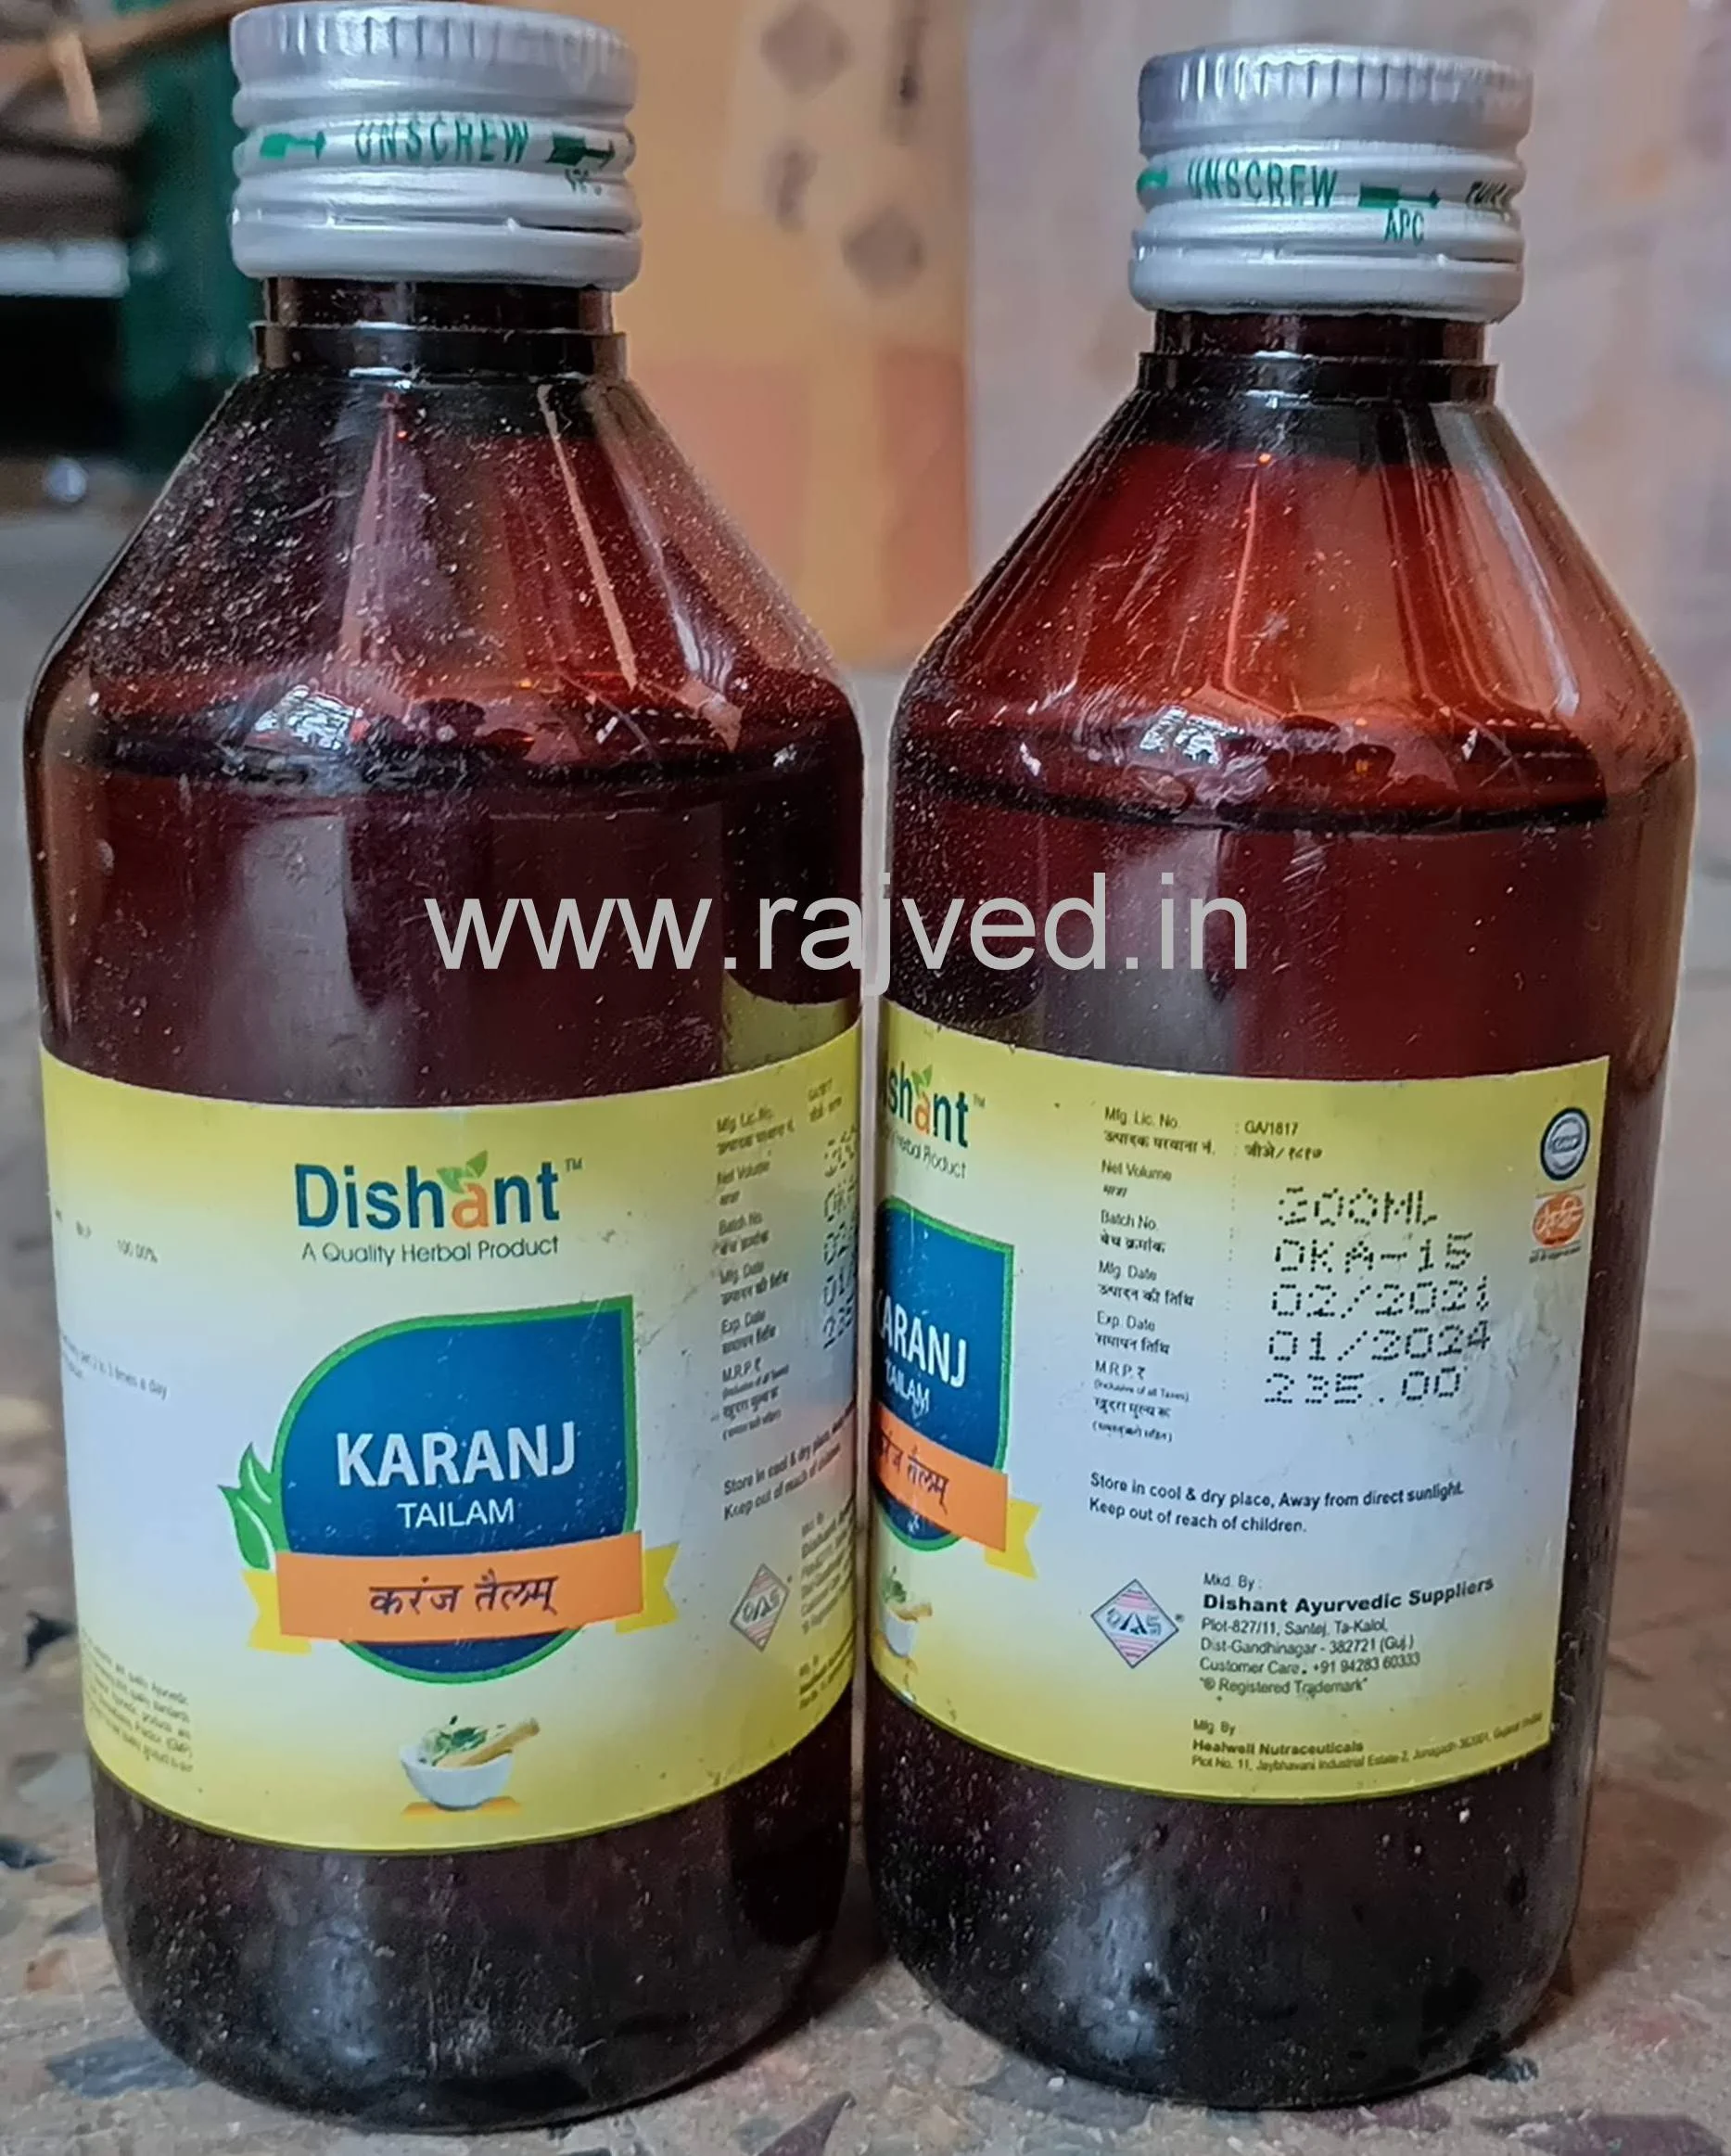 karanj tailam 200 ml dishant ayurvedic suppliers